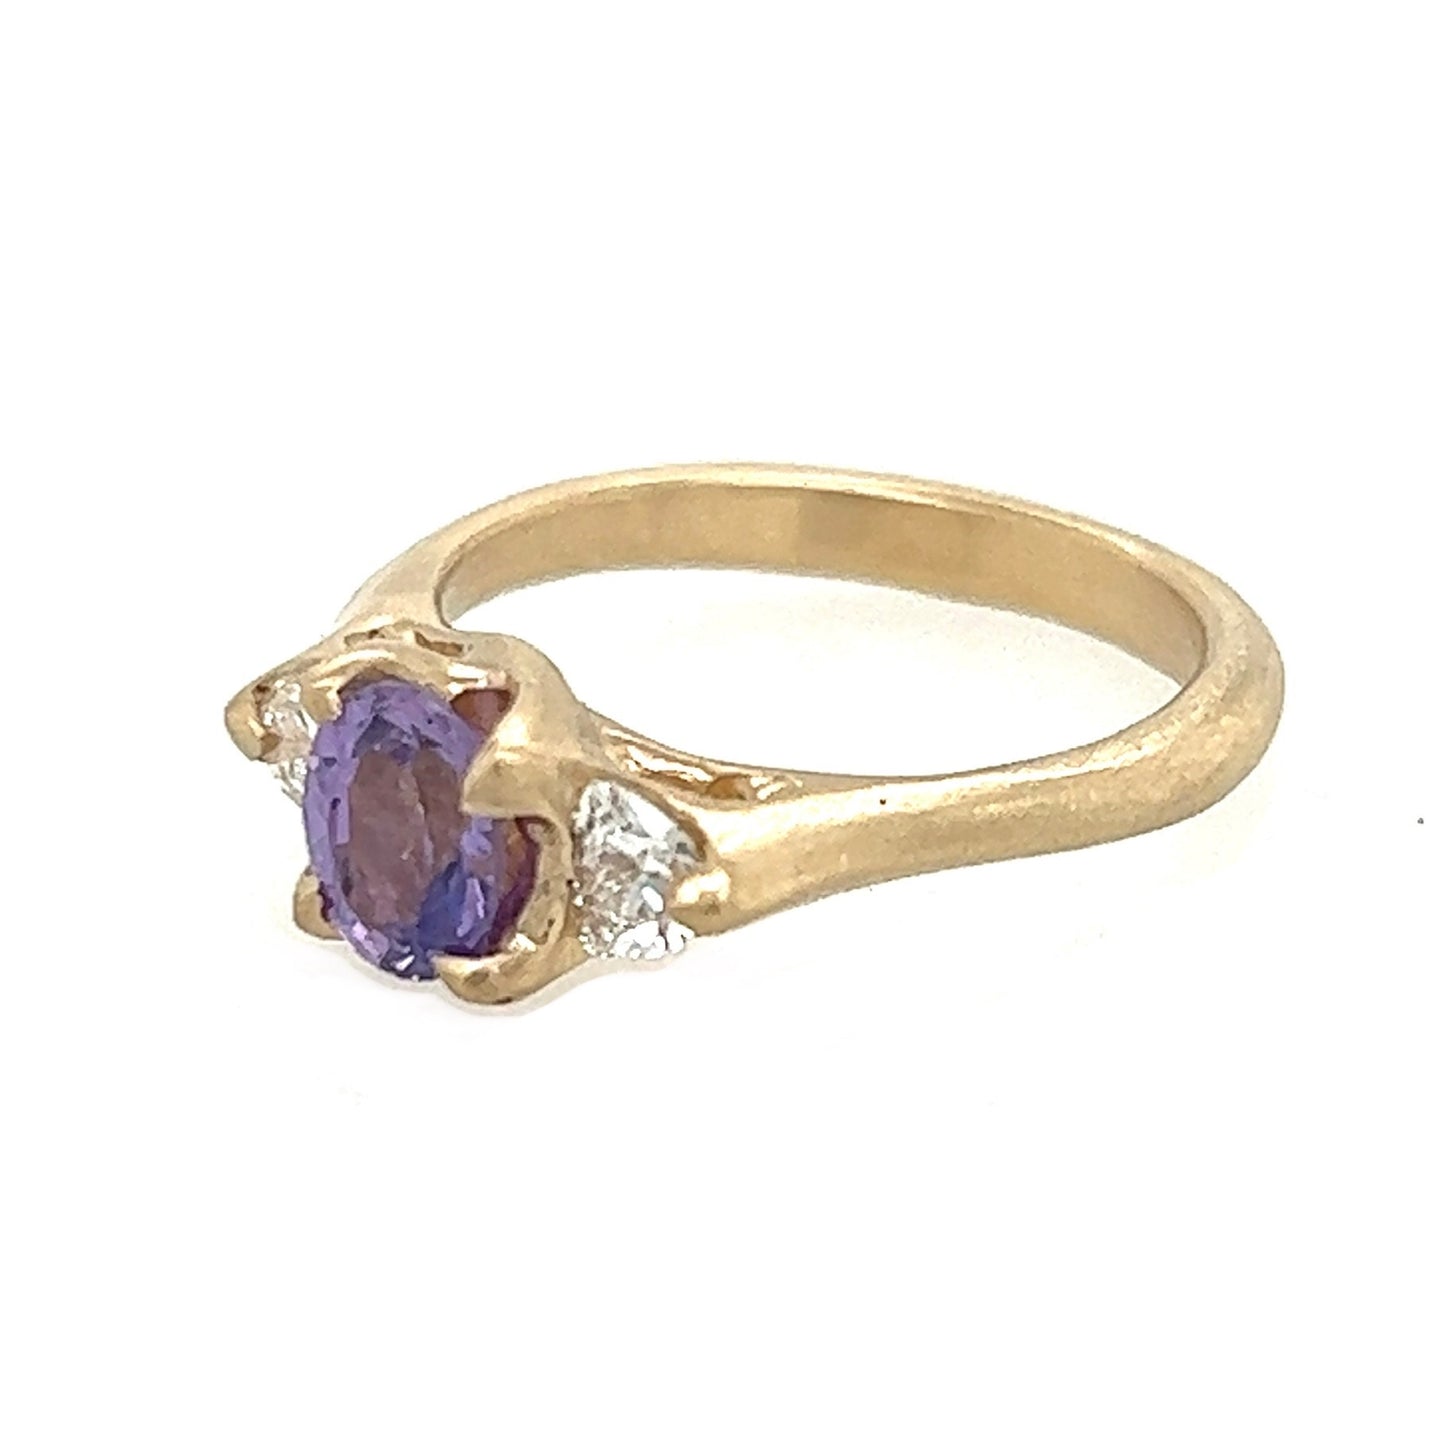 The Woven 3 Stone- Purple Sapphire & LAB diamonds